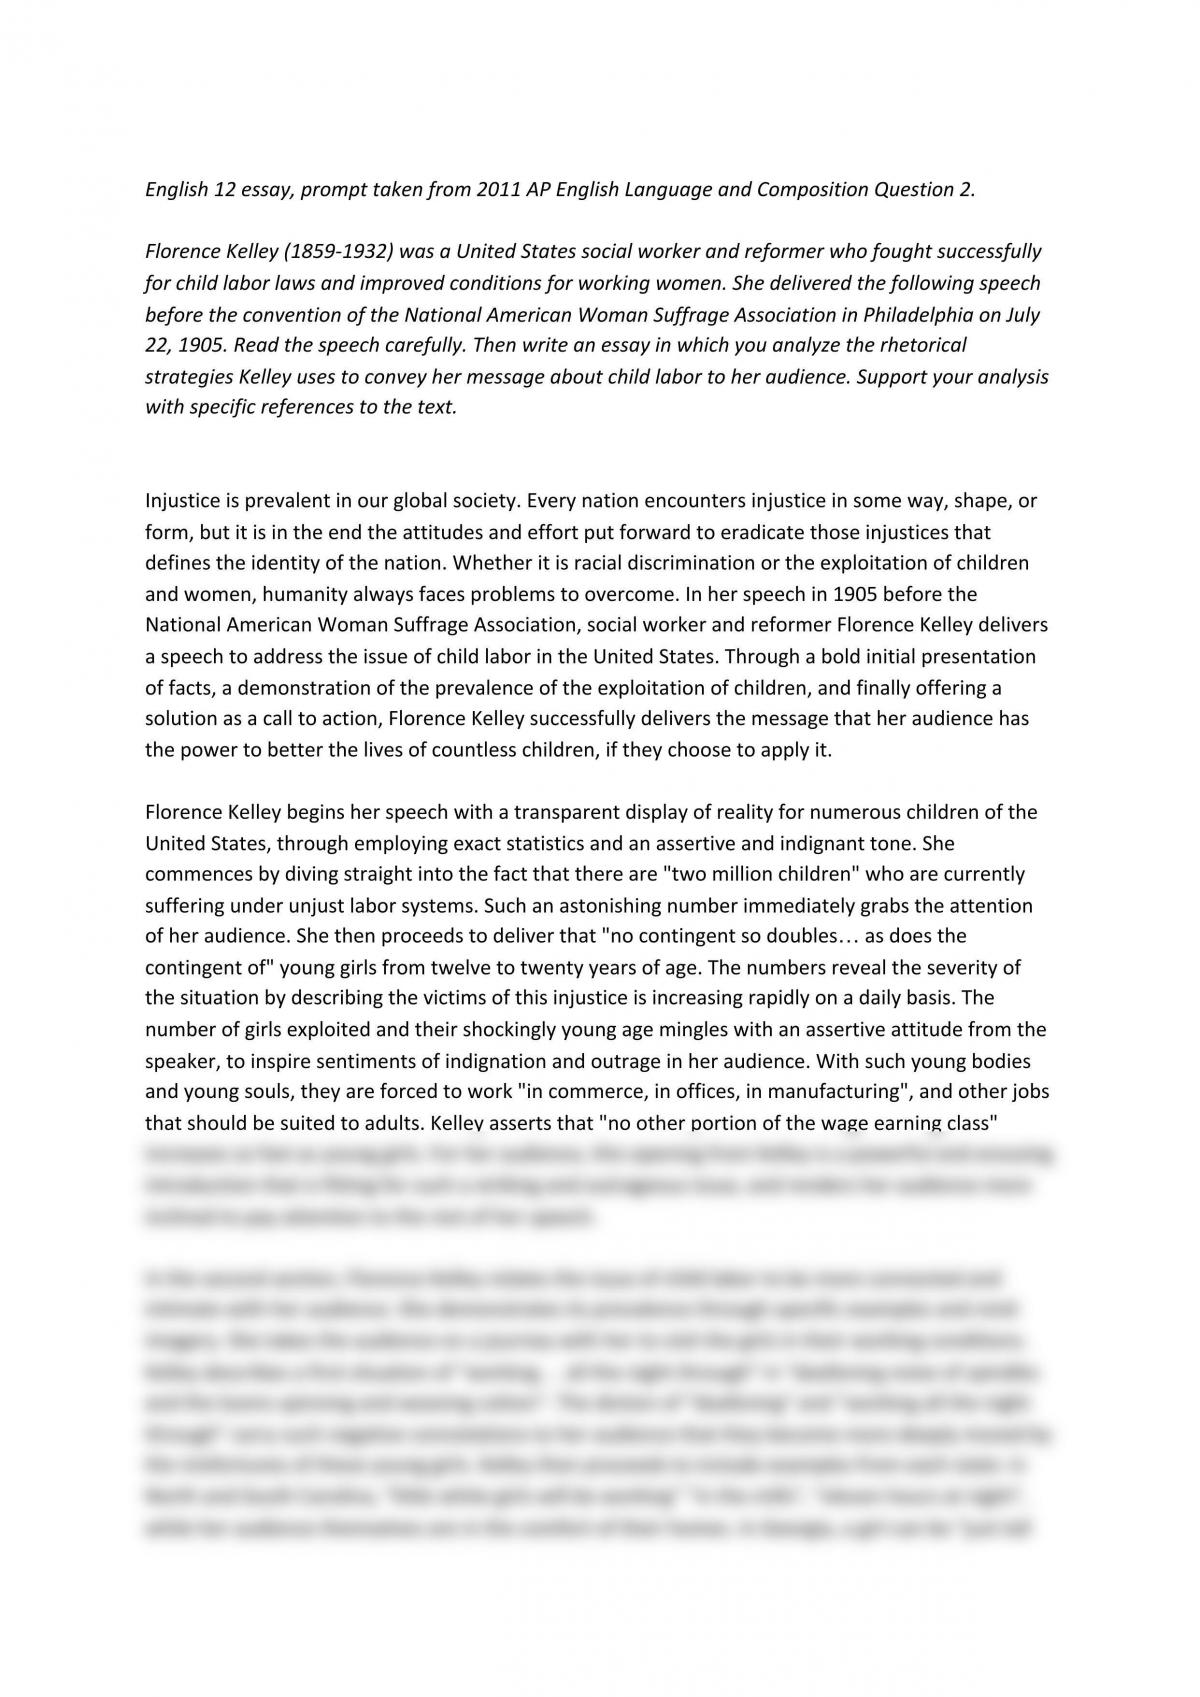 Florence Kelley speech Rhetorical Analysis - Page 1